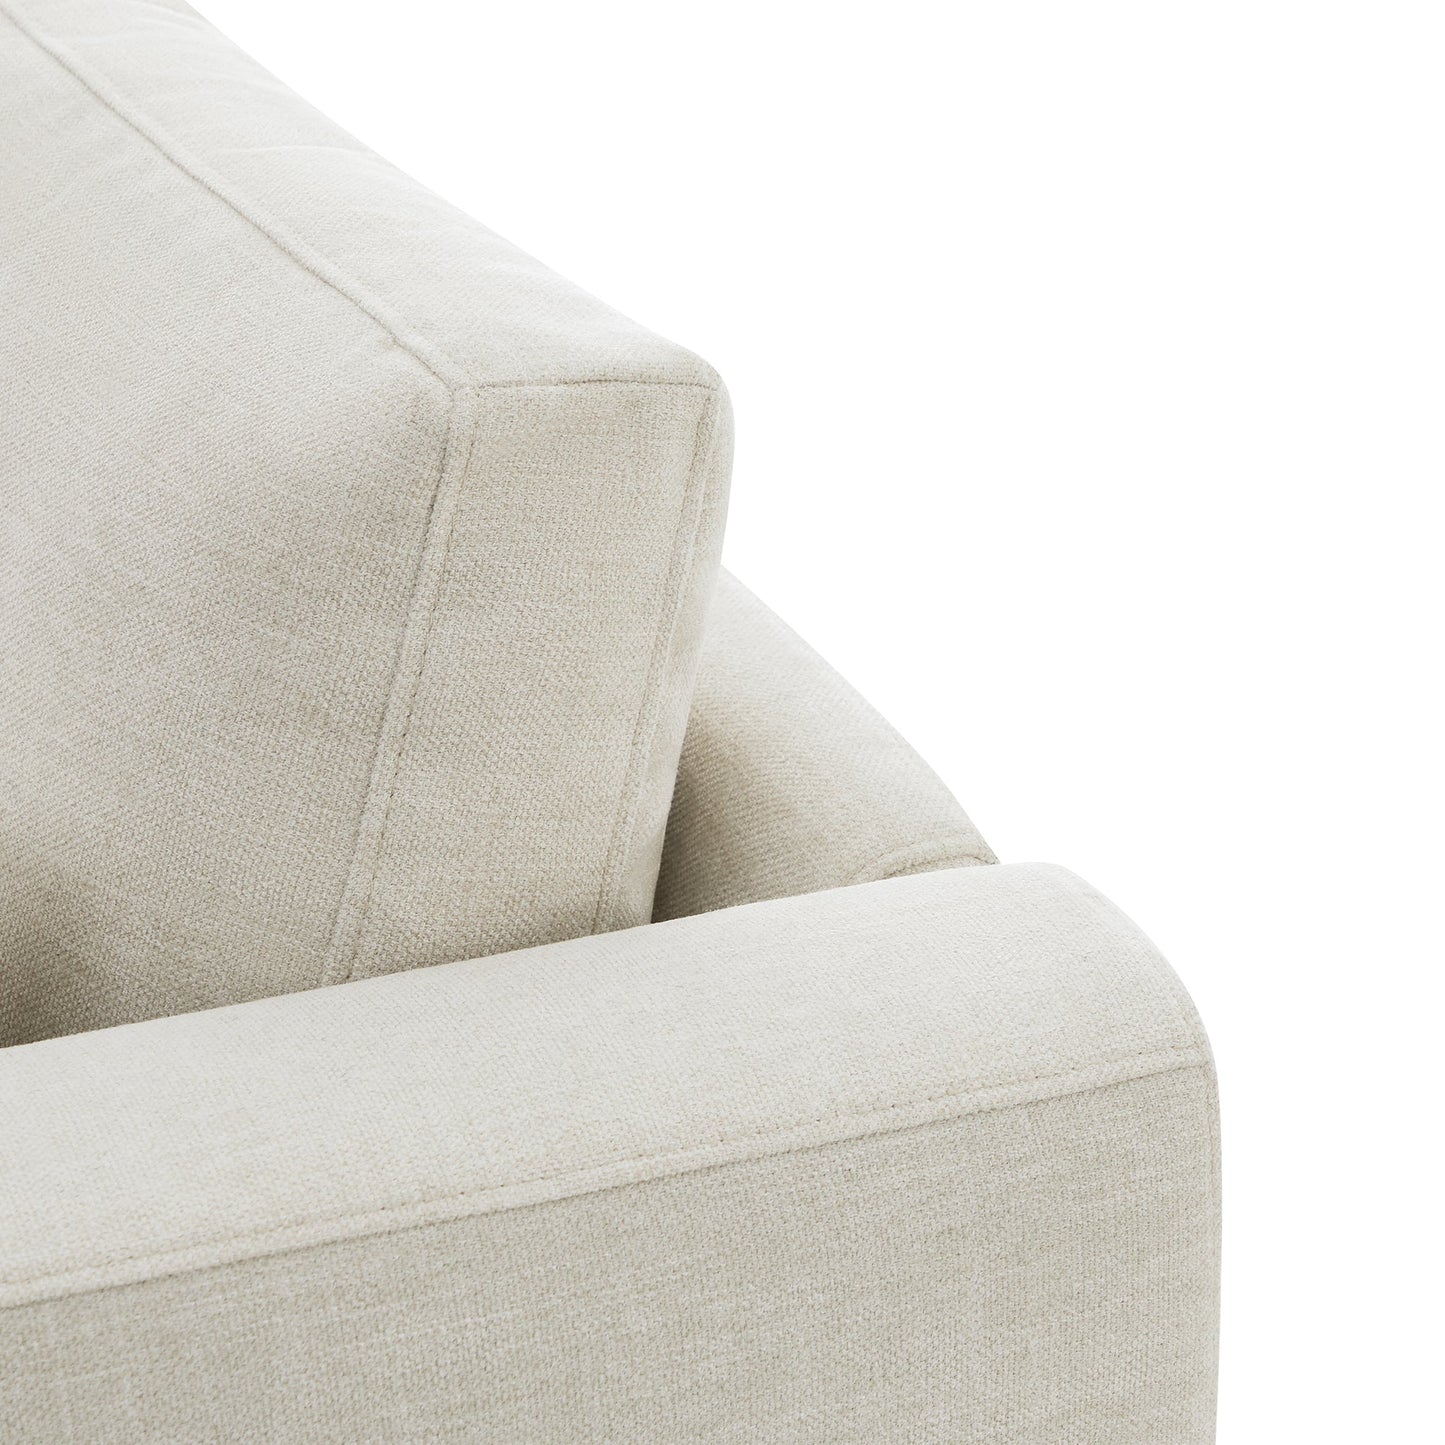 CHITA LIVING-Delaney 2-Piece Modular Sofa (78'')-Sofas-Fabric-Linen-